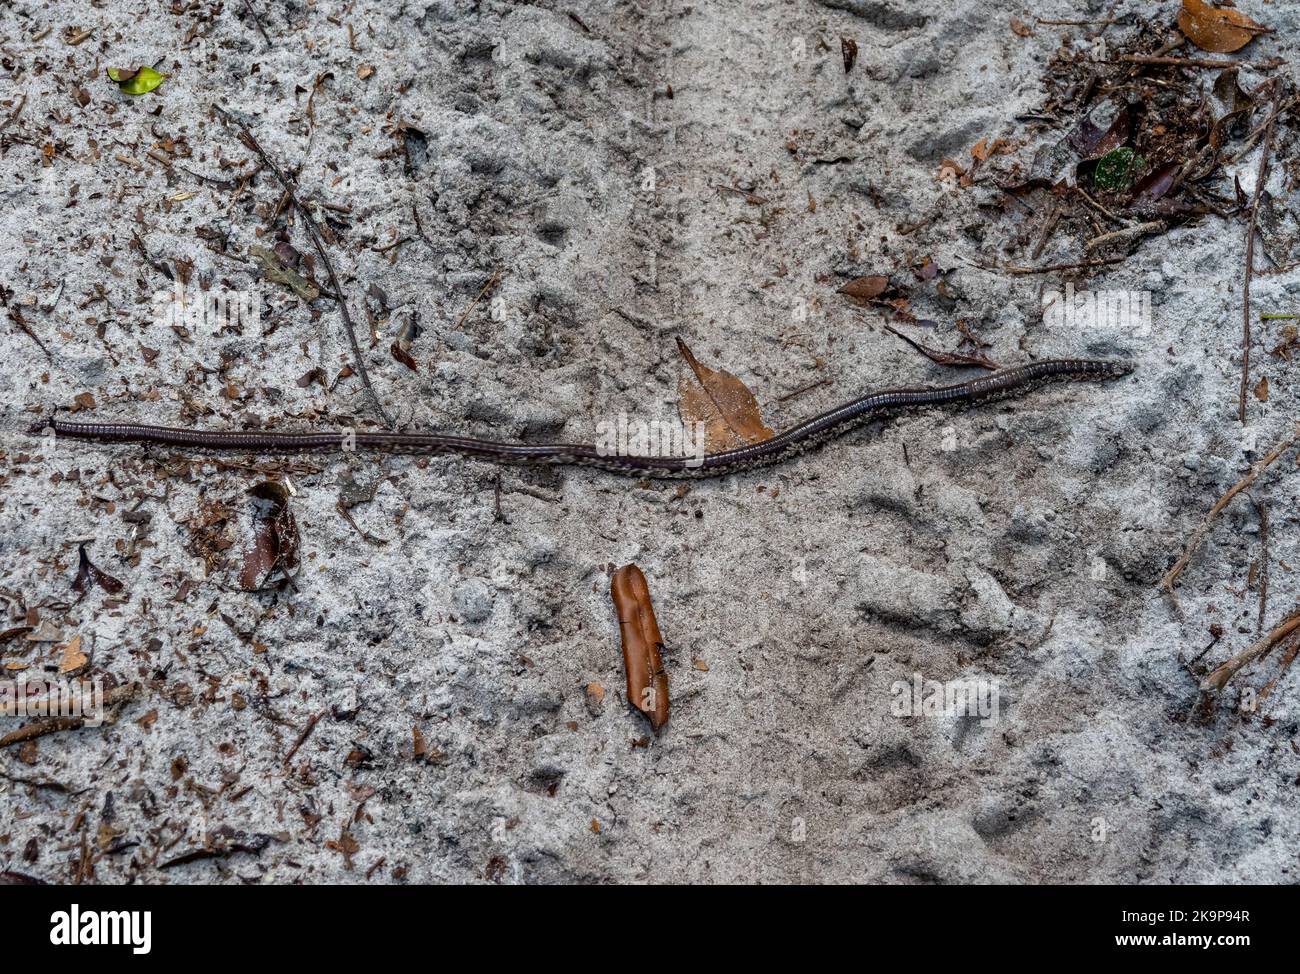 A giant earthworm (Rhinodrilus sp.) over 30 cm long crossing a sandy trail. Amazonas, Brazil Stock Photo